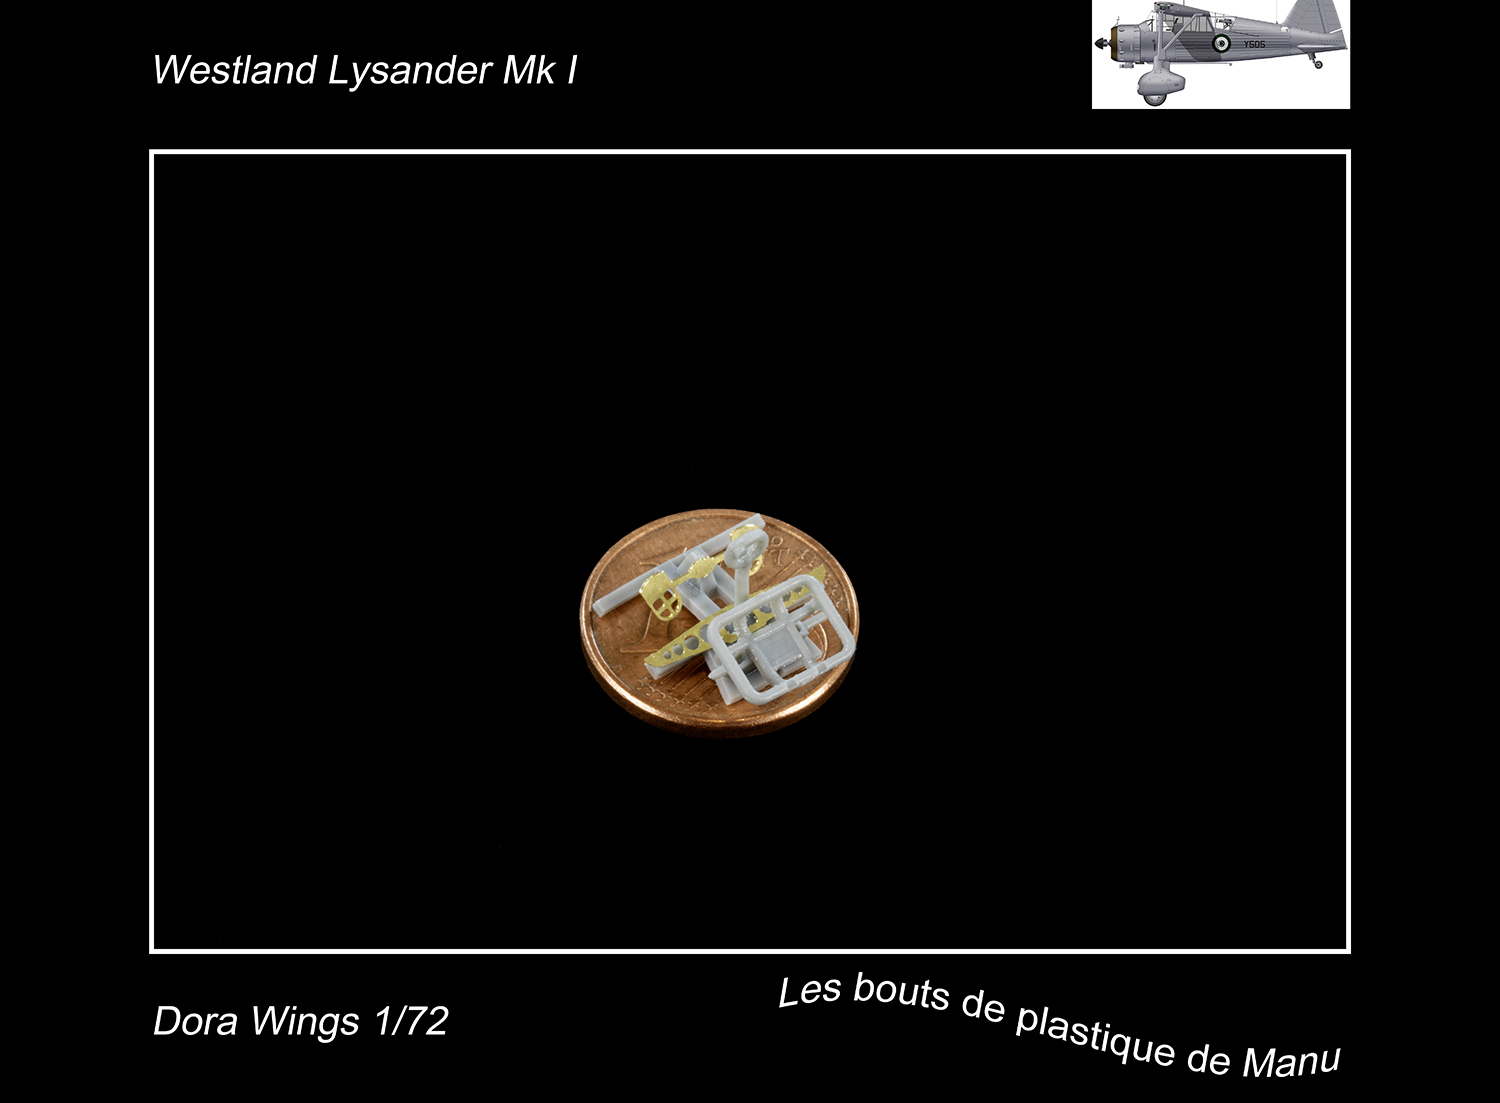 [Dora Wings] Westland Lysander Mk I - Je préfère en rire... - Page 2 9cws